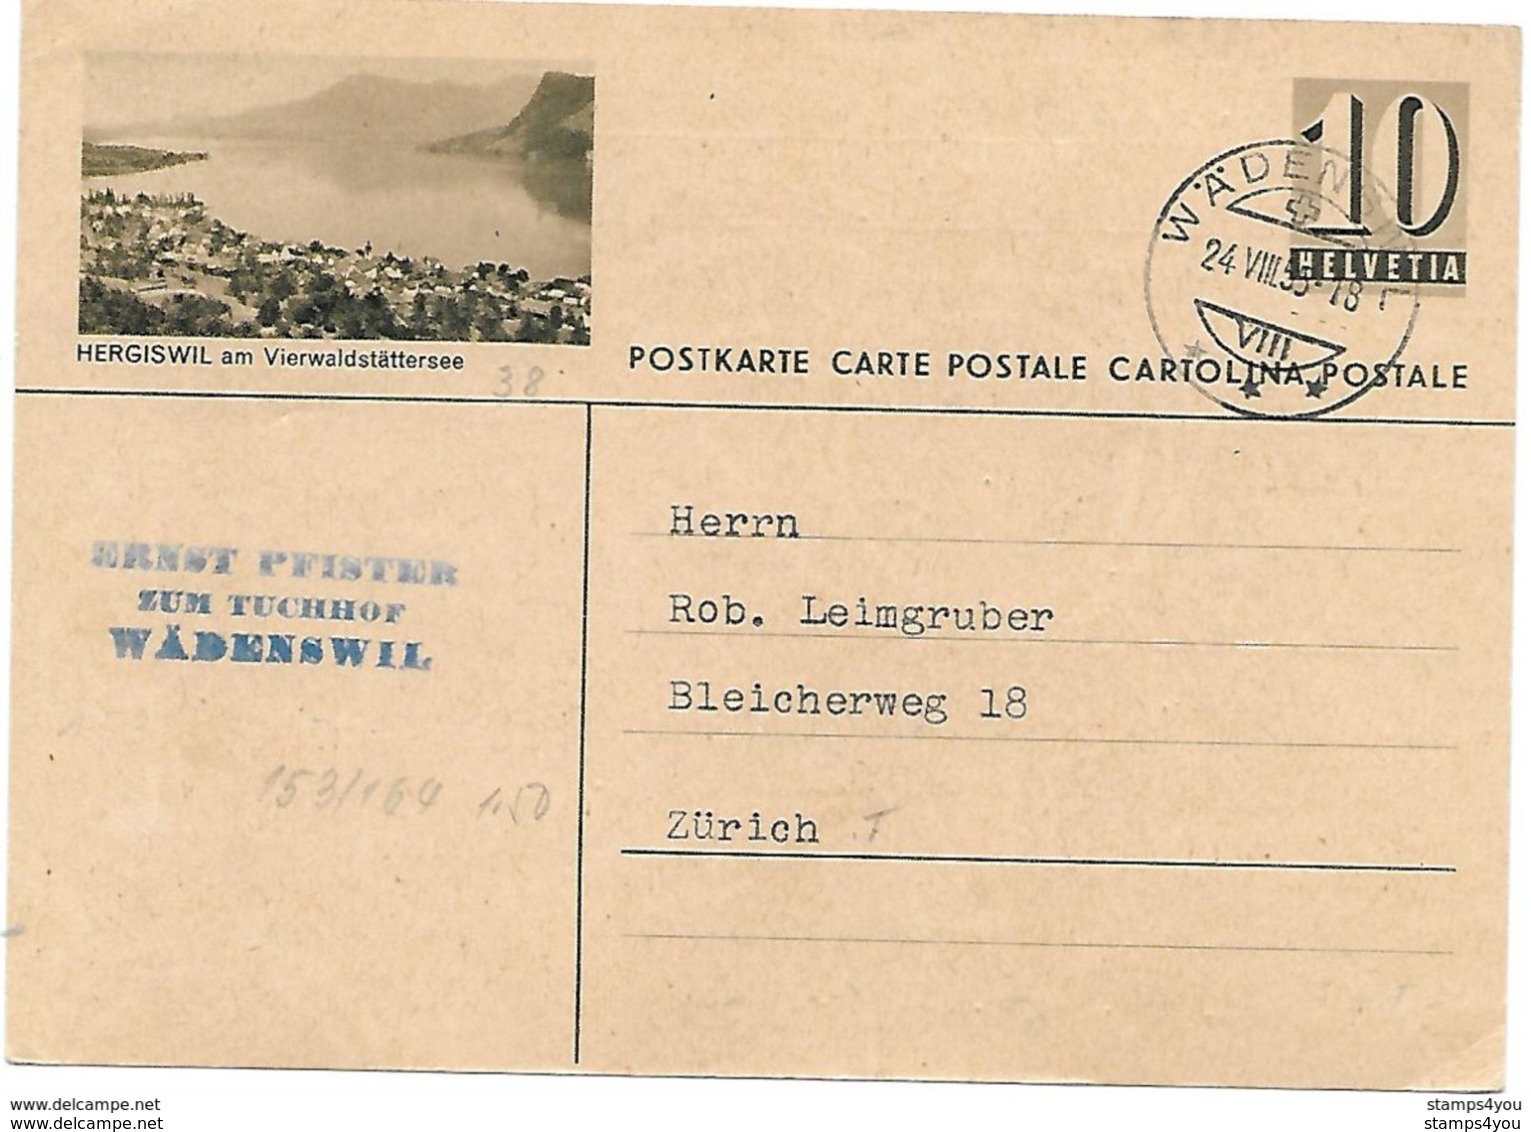 161 - 83 - Entier Postal Avec Illustration "Hergiswil" Cachet à Date Wädenswil 1955 - Interi Postali